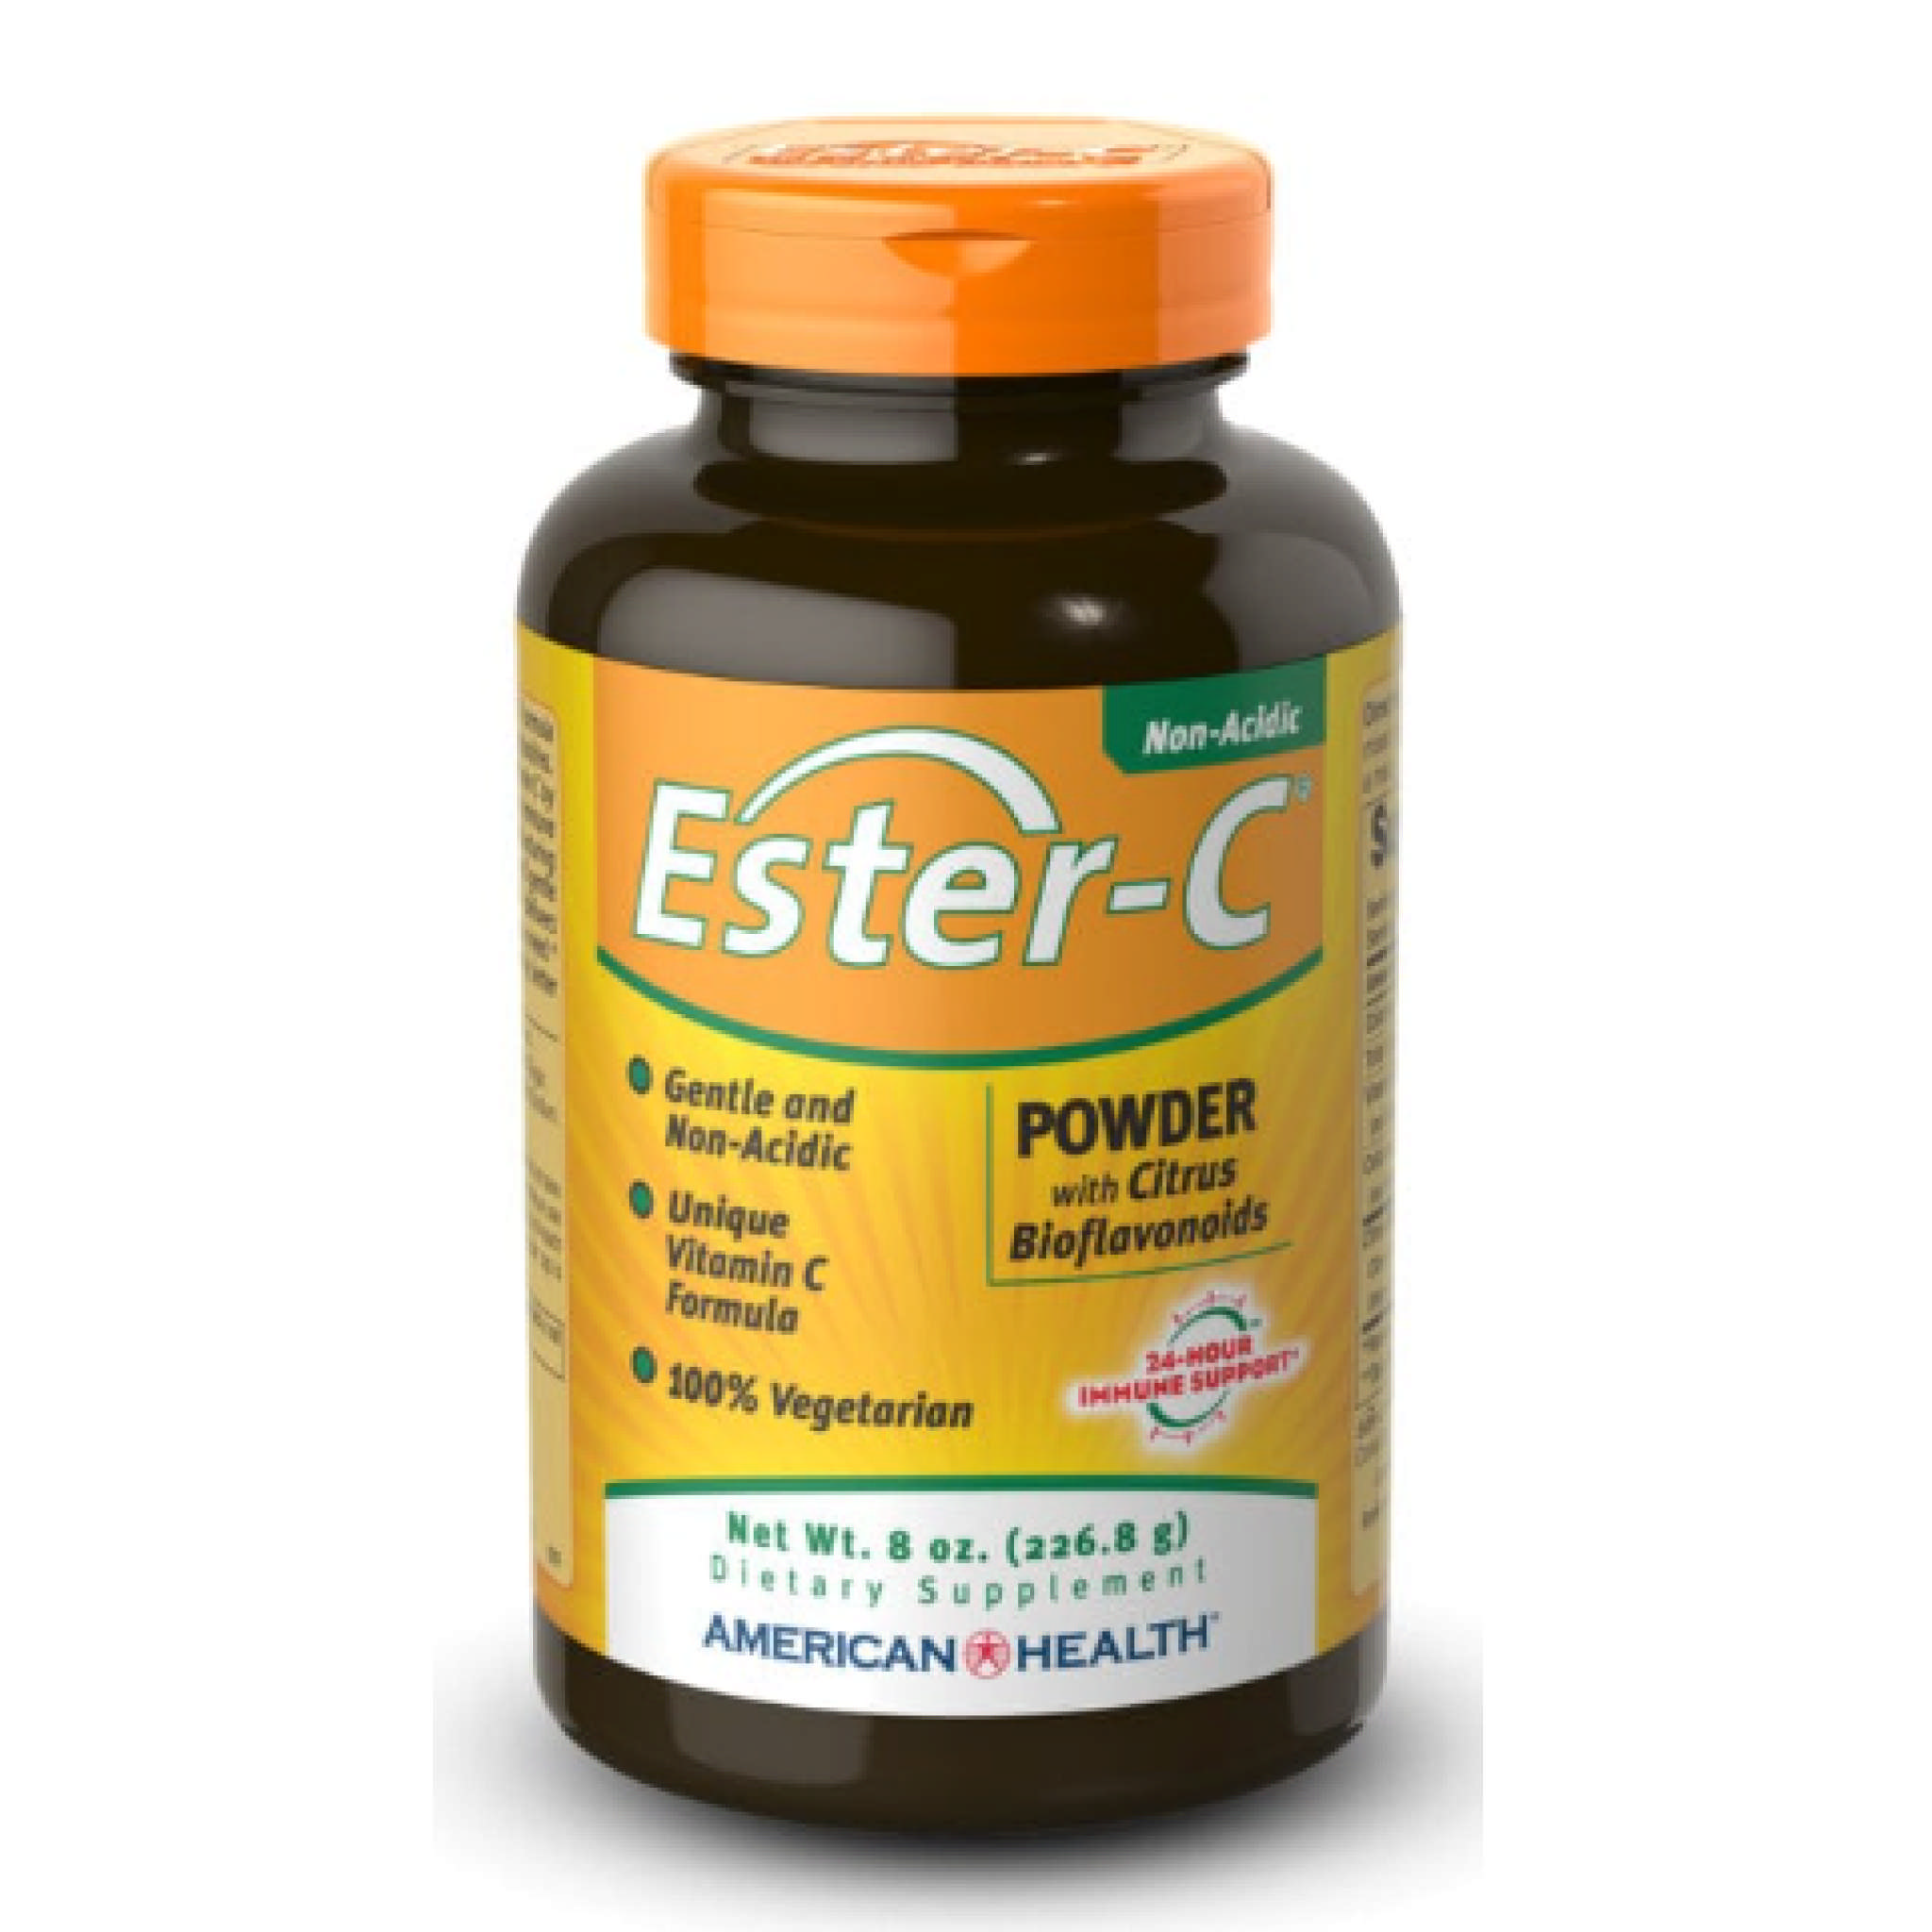 American Health - Ester C W/Bioflavonoids powder